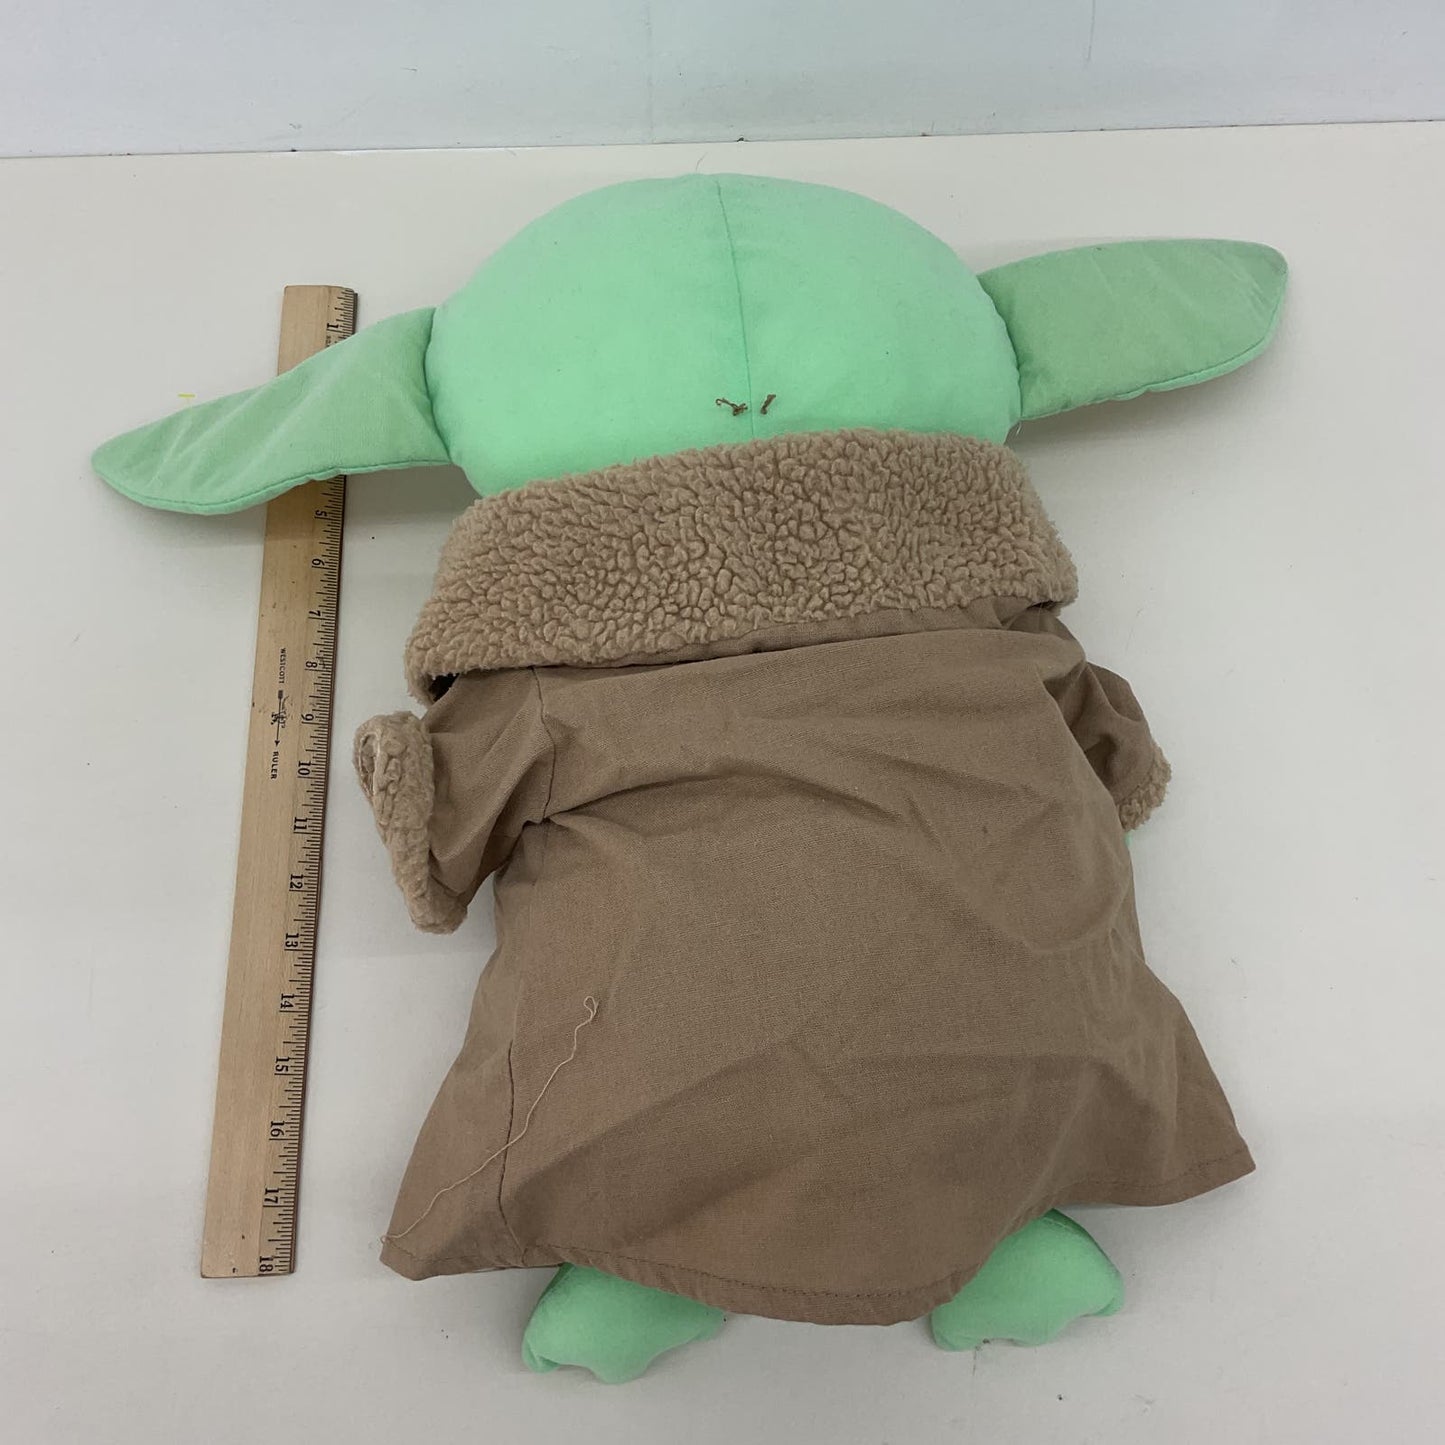 CUTE Soft Star Wars Baby Grogu Yoda Plush Doll Character Stuffed Toy - Warehouse Toys